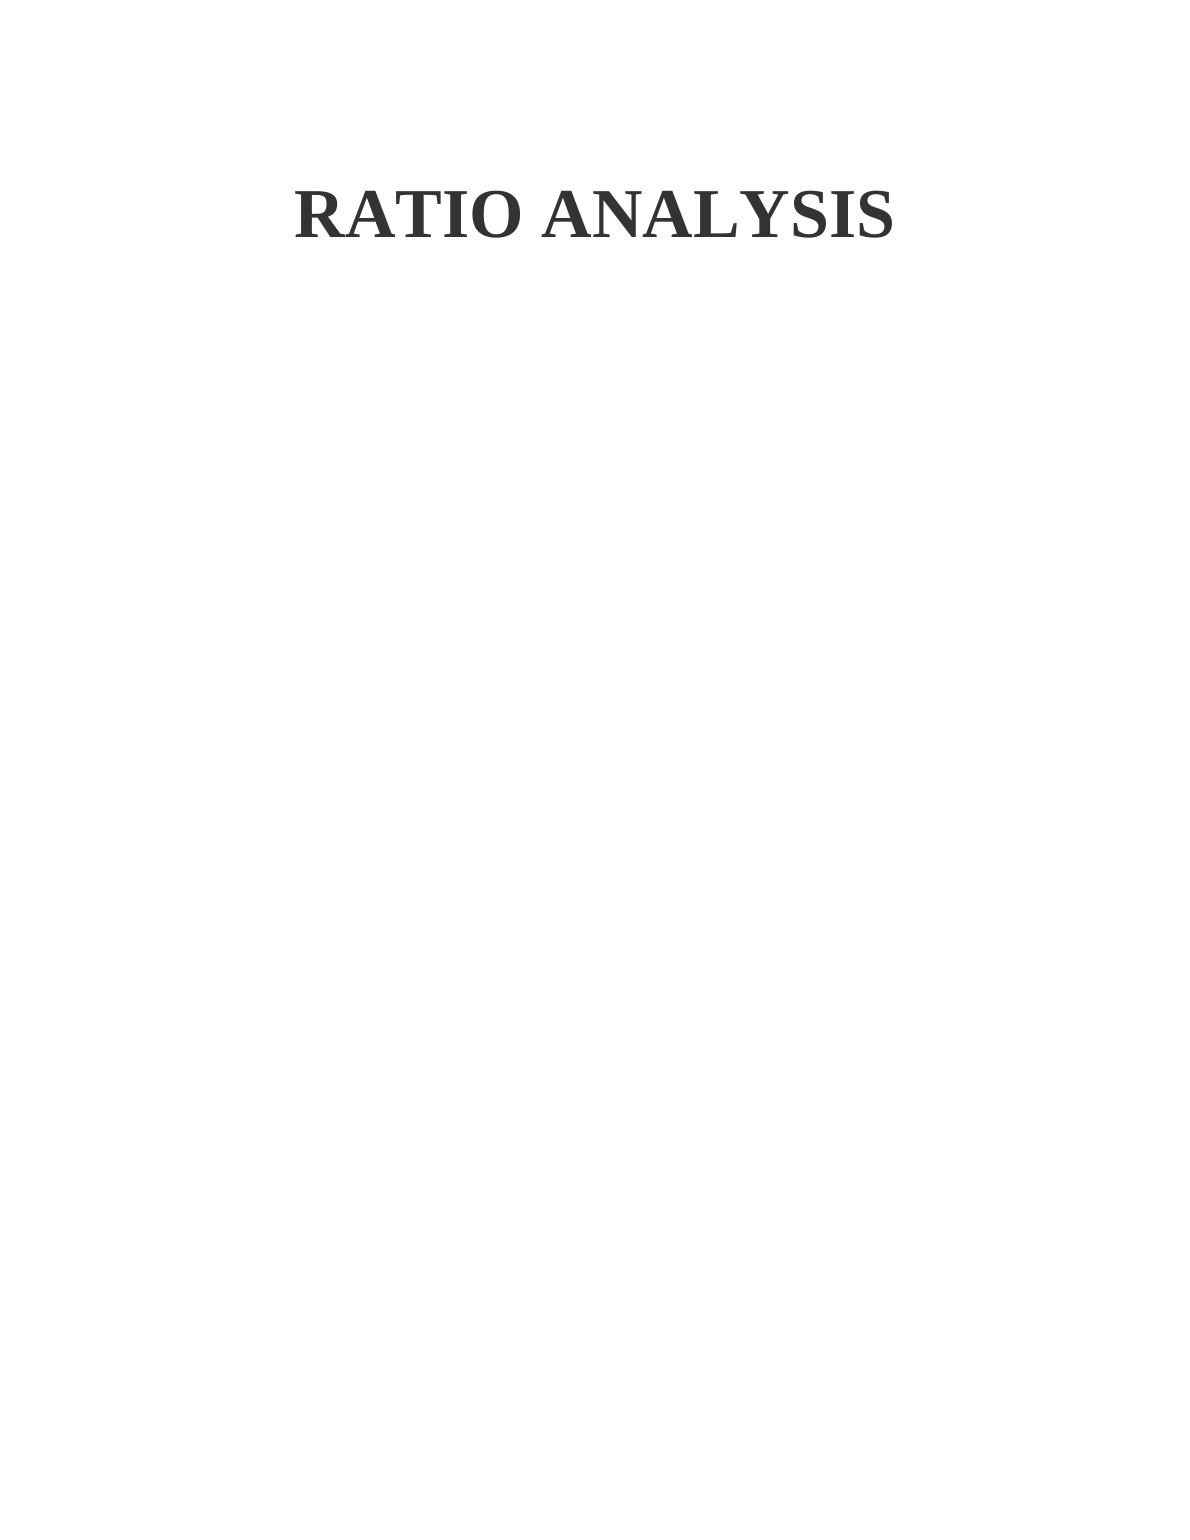 Ratio Analysis Assignment (Doc)_1